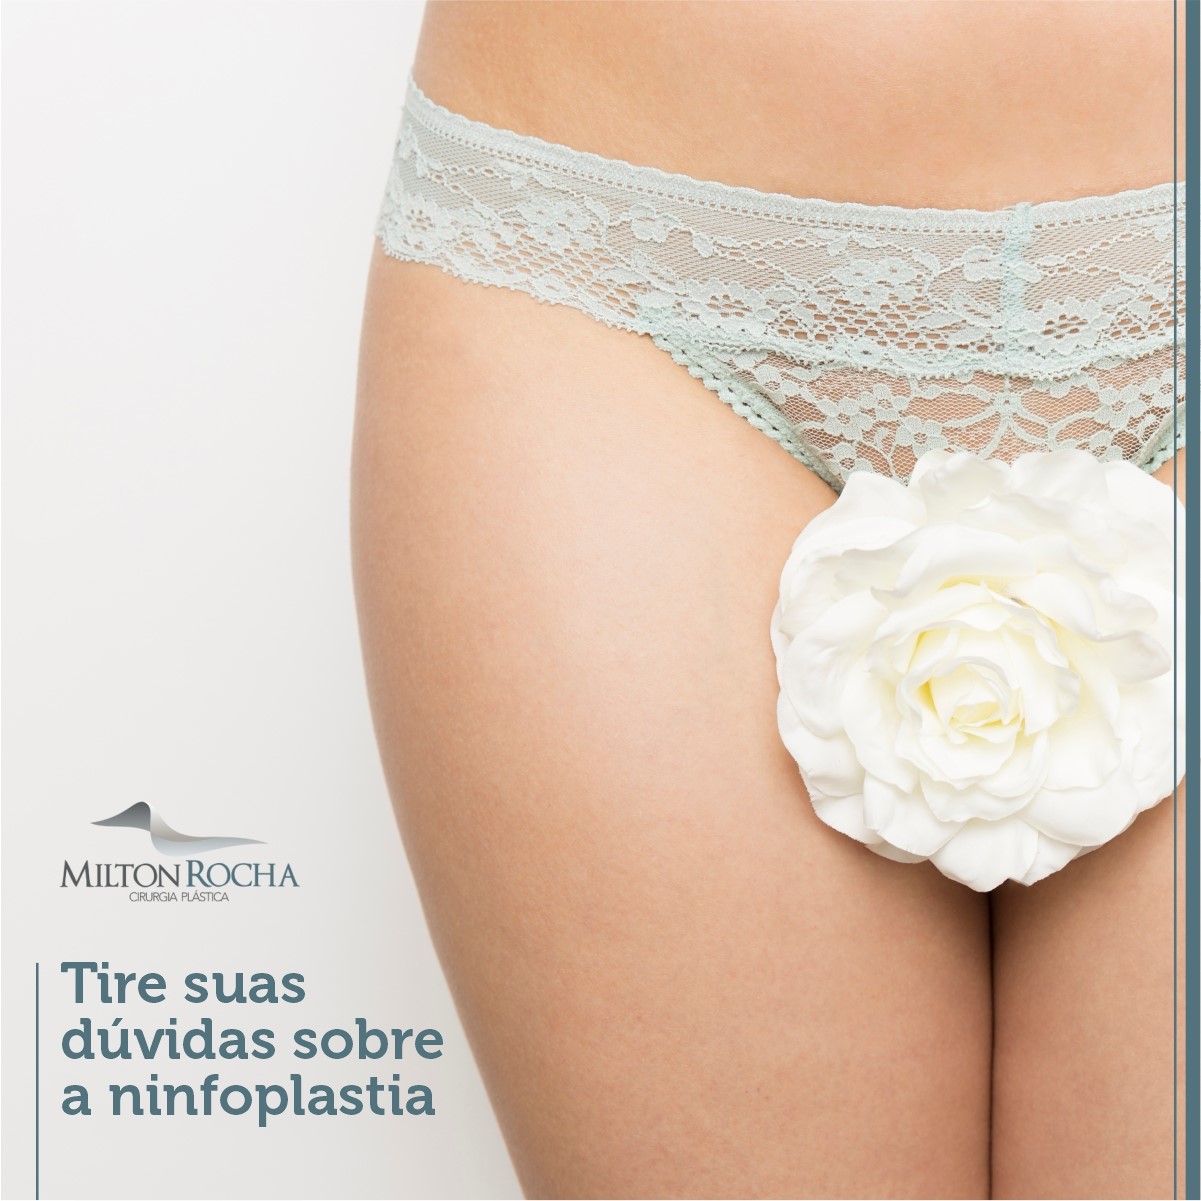 Read more about the article Cirurgia Plástica Recife – Ninfoplastia – Tire suas dúvidas sobre a ninfoplastia.